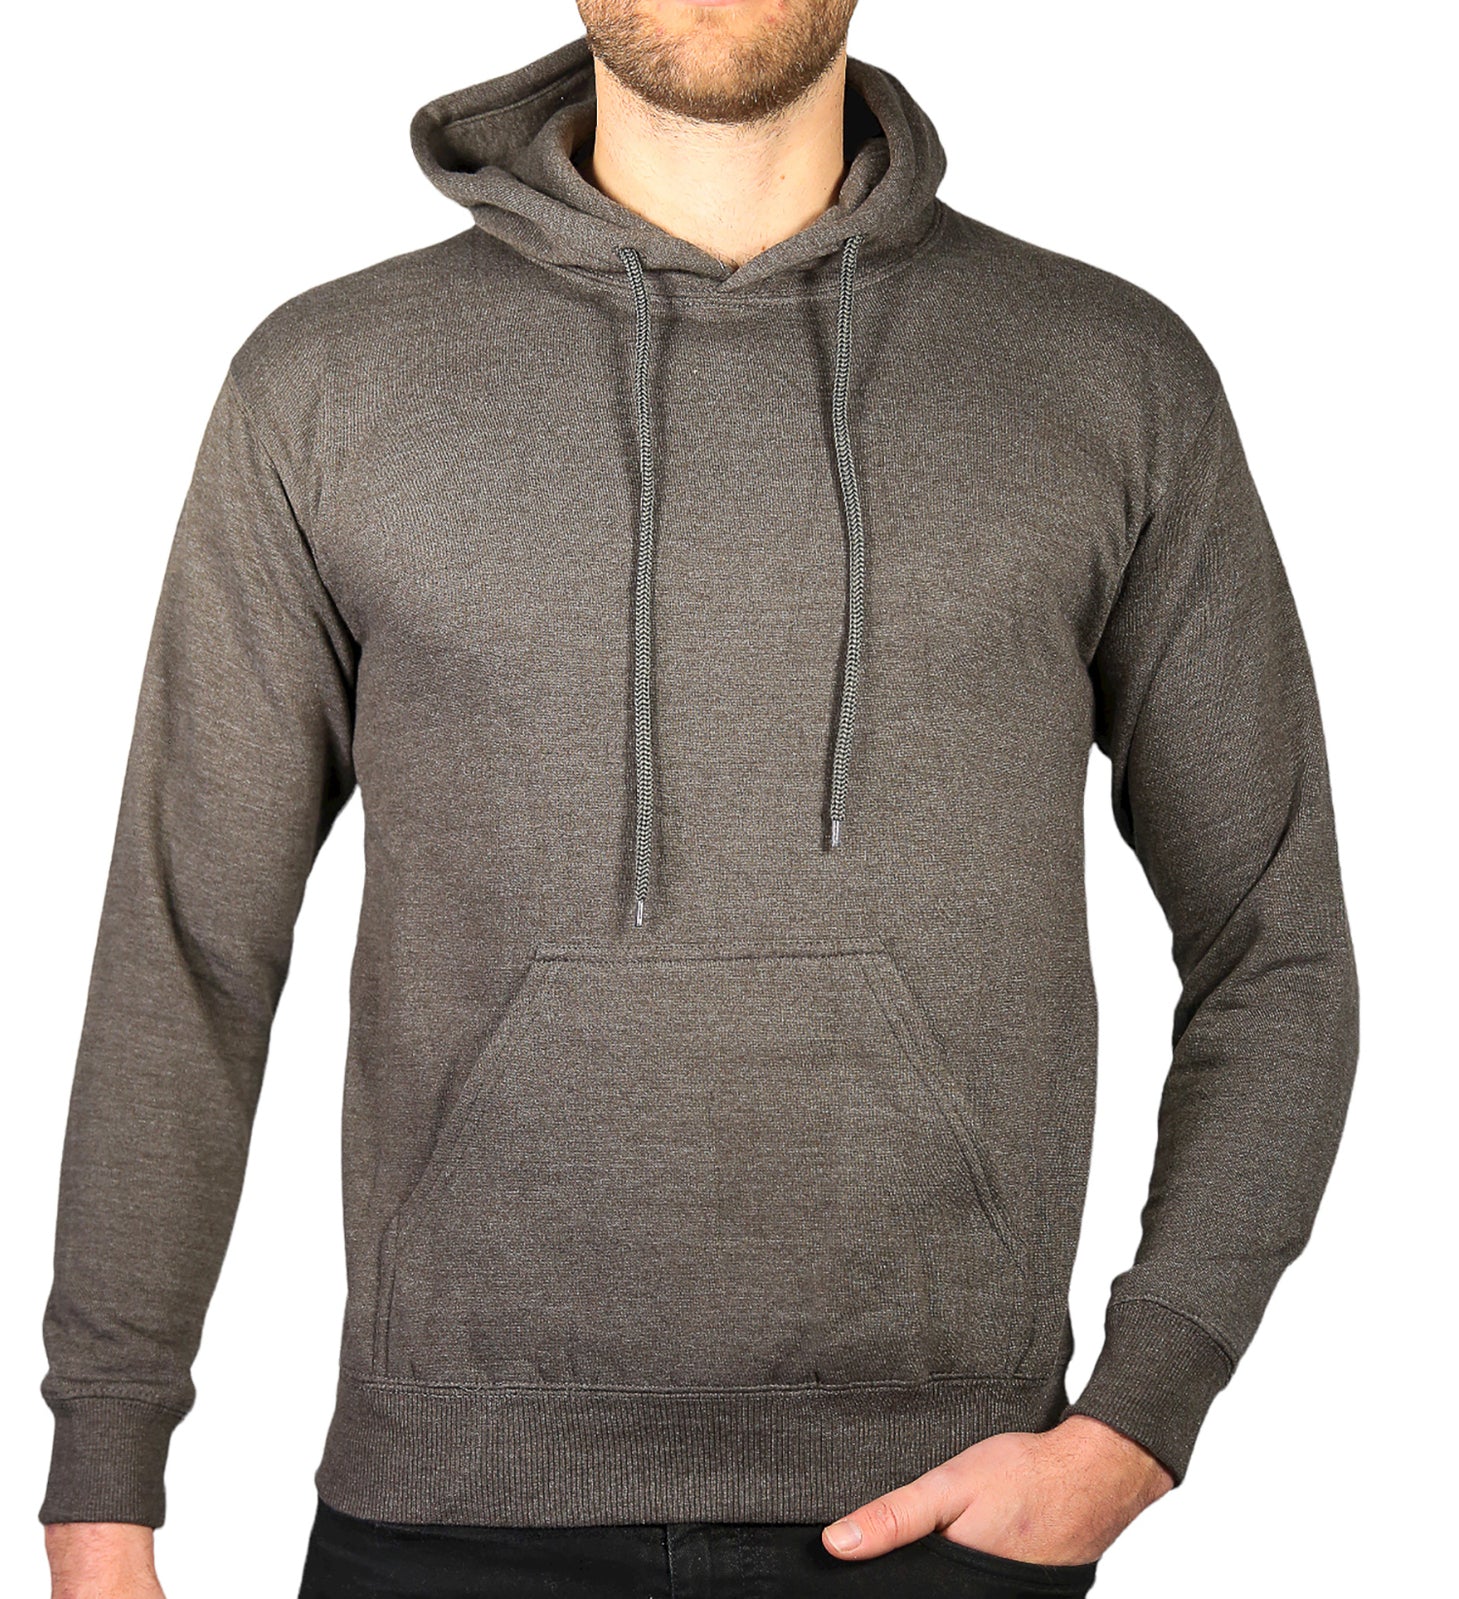 Adult Mens 100% Cotton Fleece Hoodie Jumper Pullover Sweater Warm Sweatshirt - Charcoal Grey - M